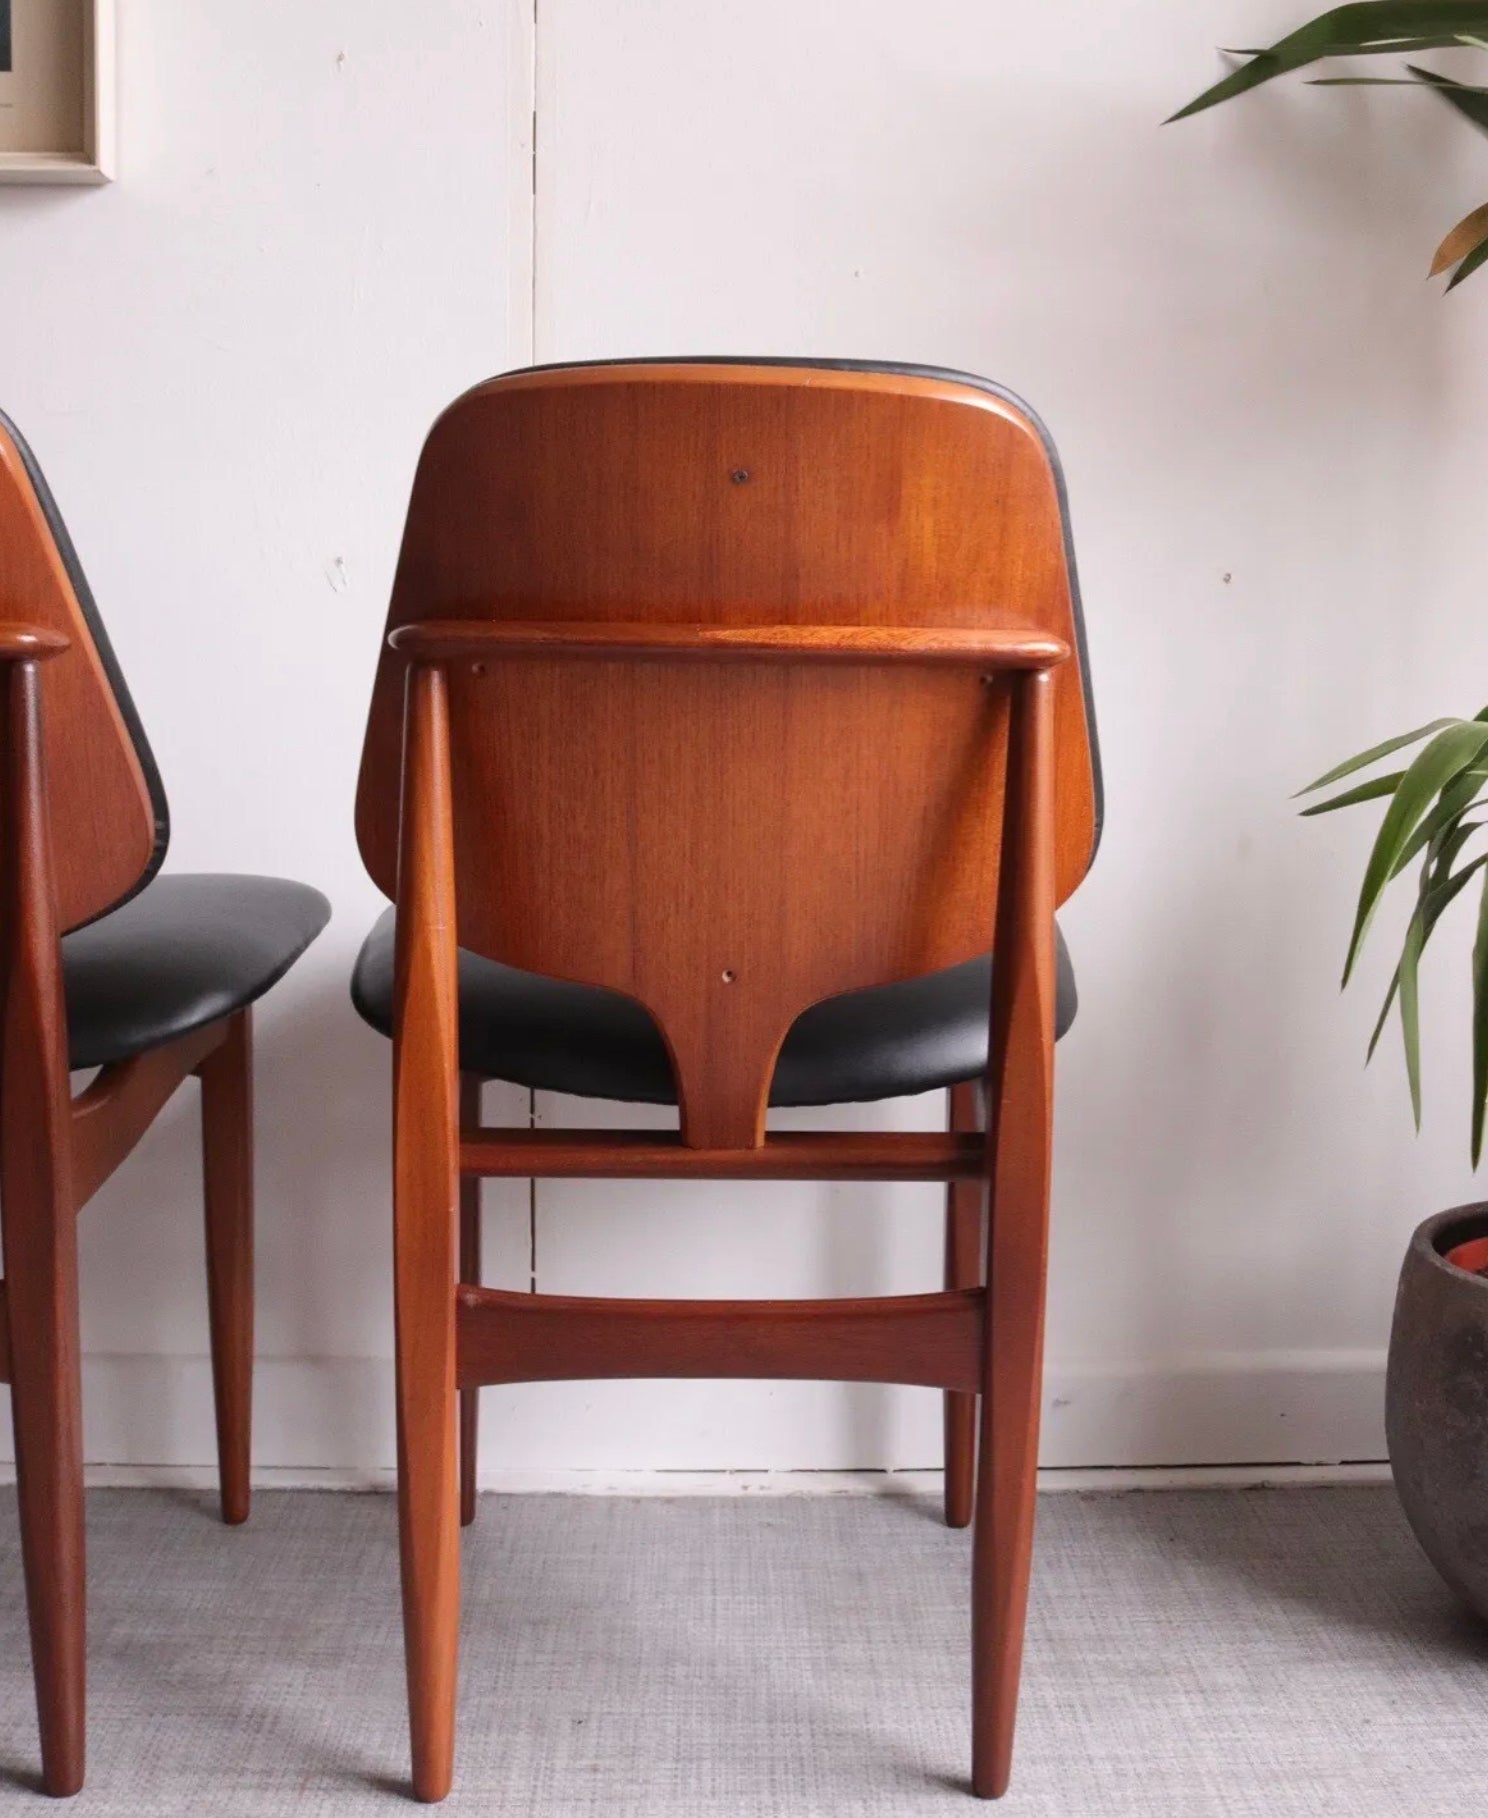 Mid Century Elliotts of Newbury  Set Of 4 Teak Dining Chairs New Upholstery - teakyfinders